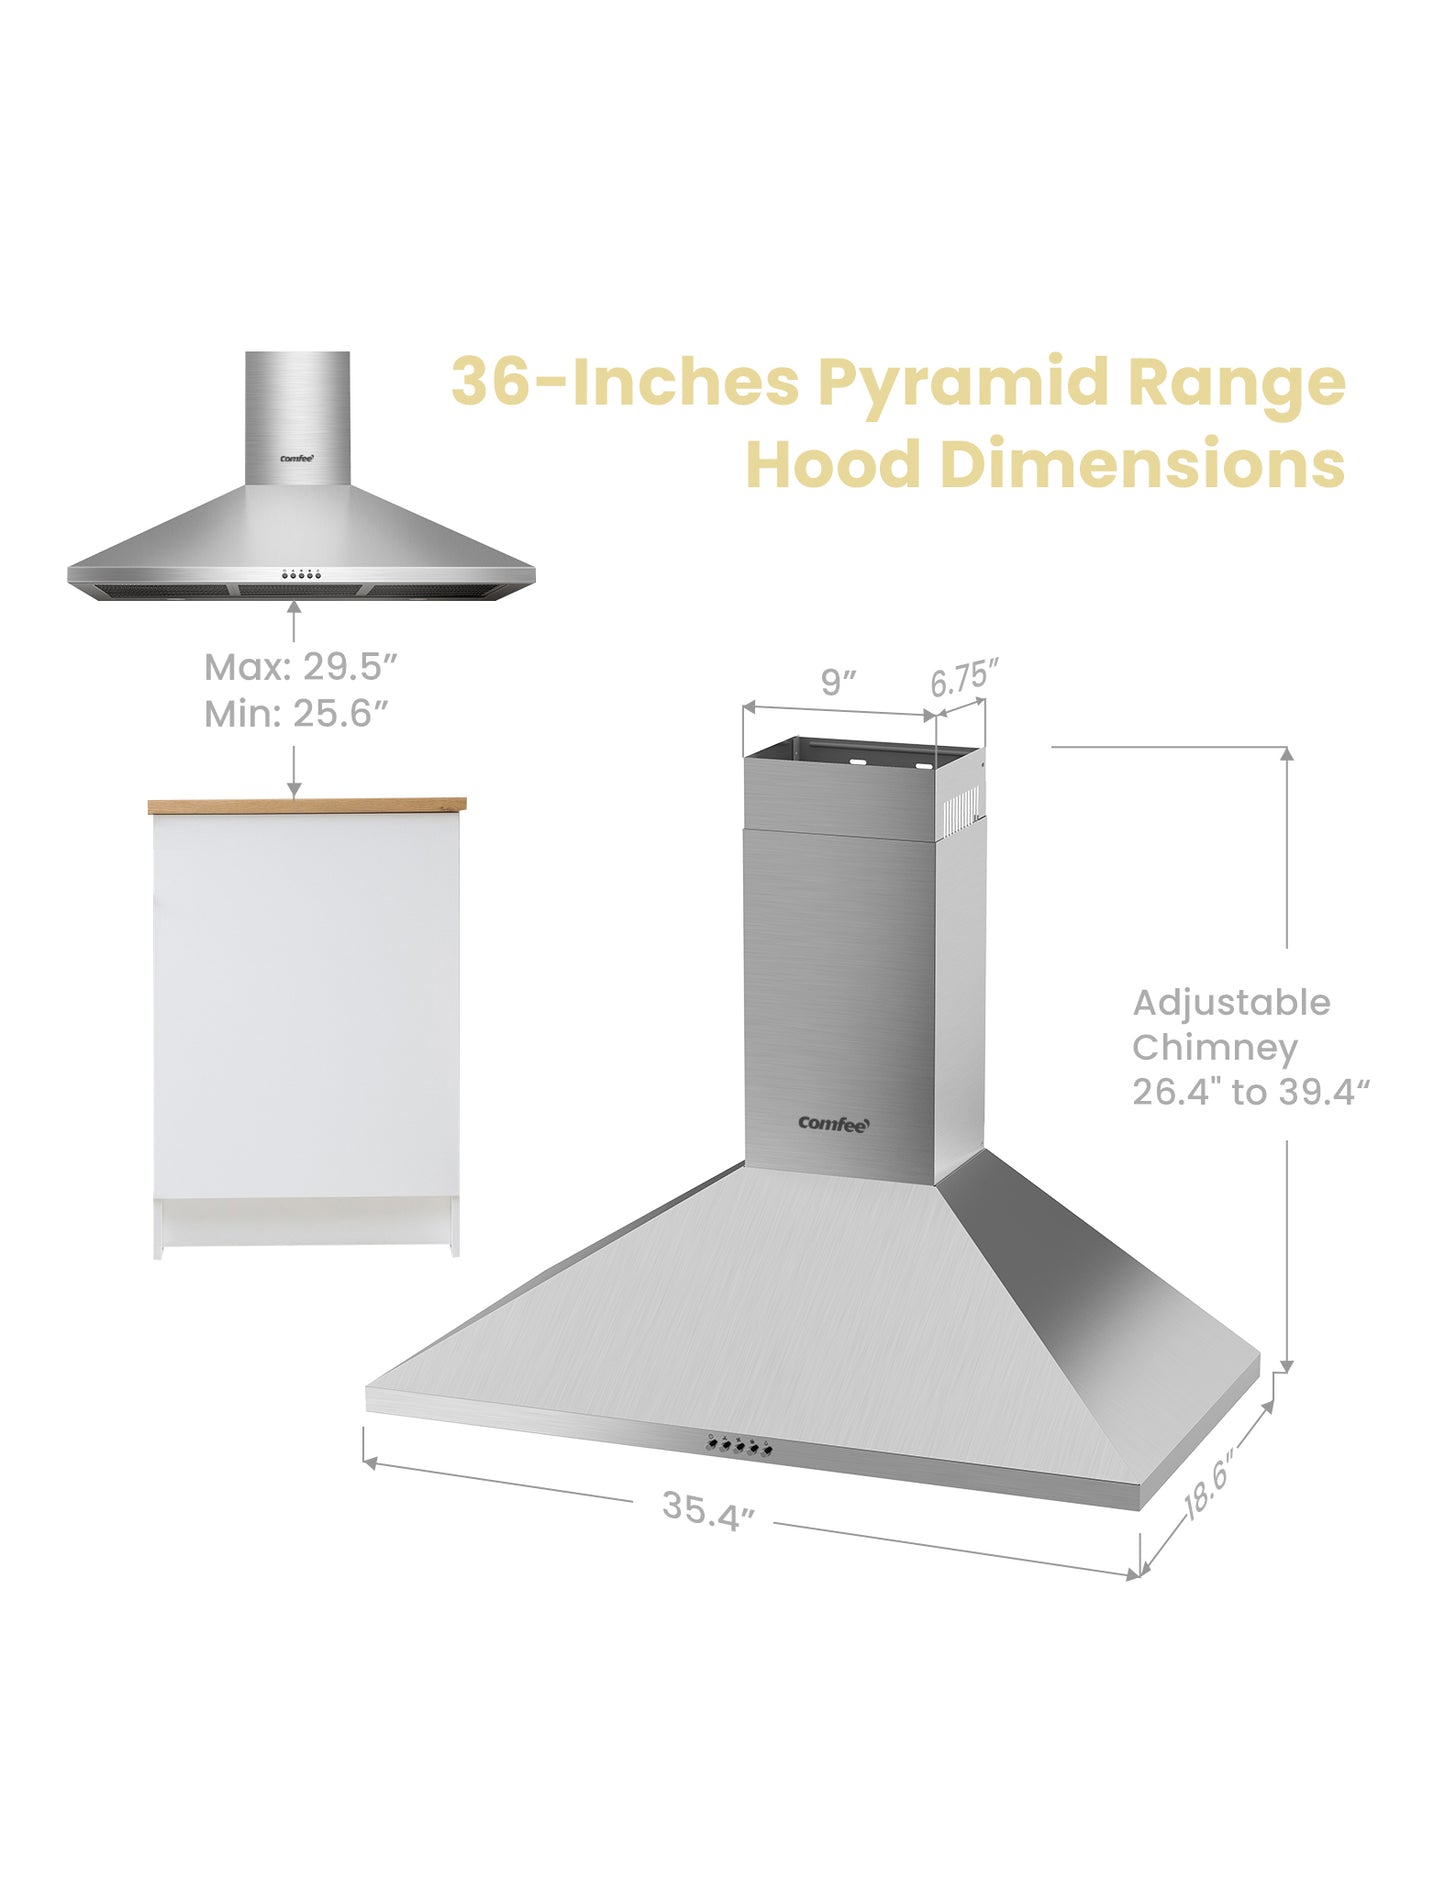 measurements of the comfee ducted pyramid range hood